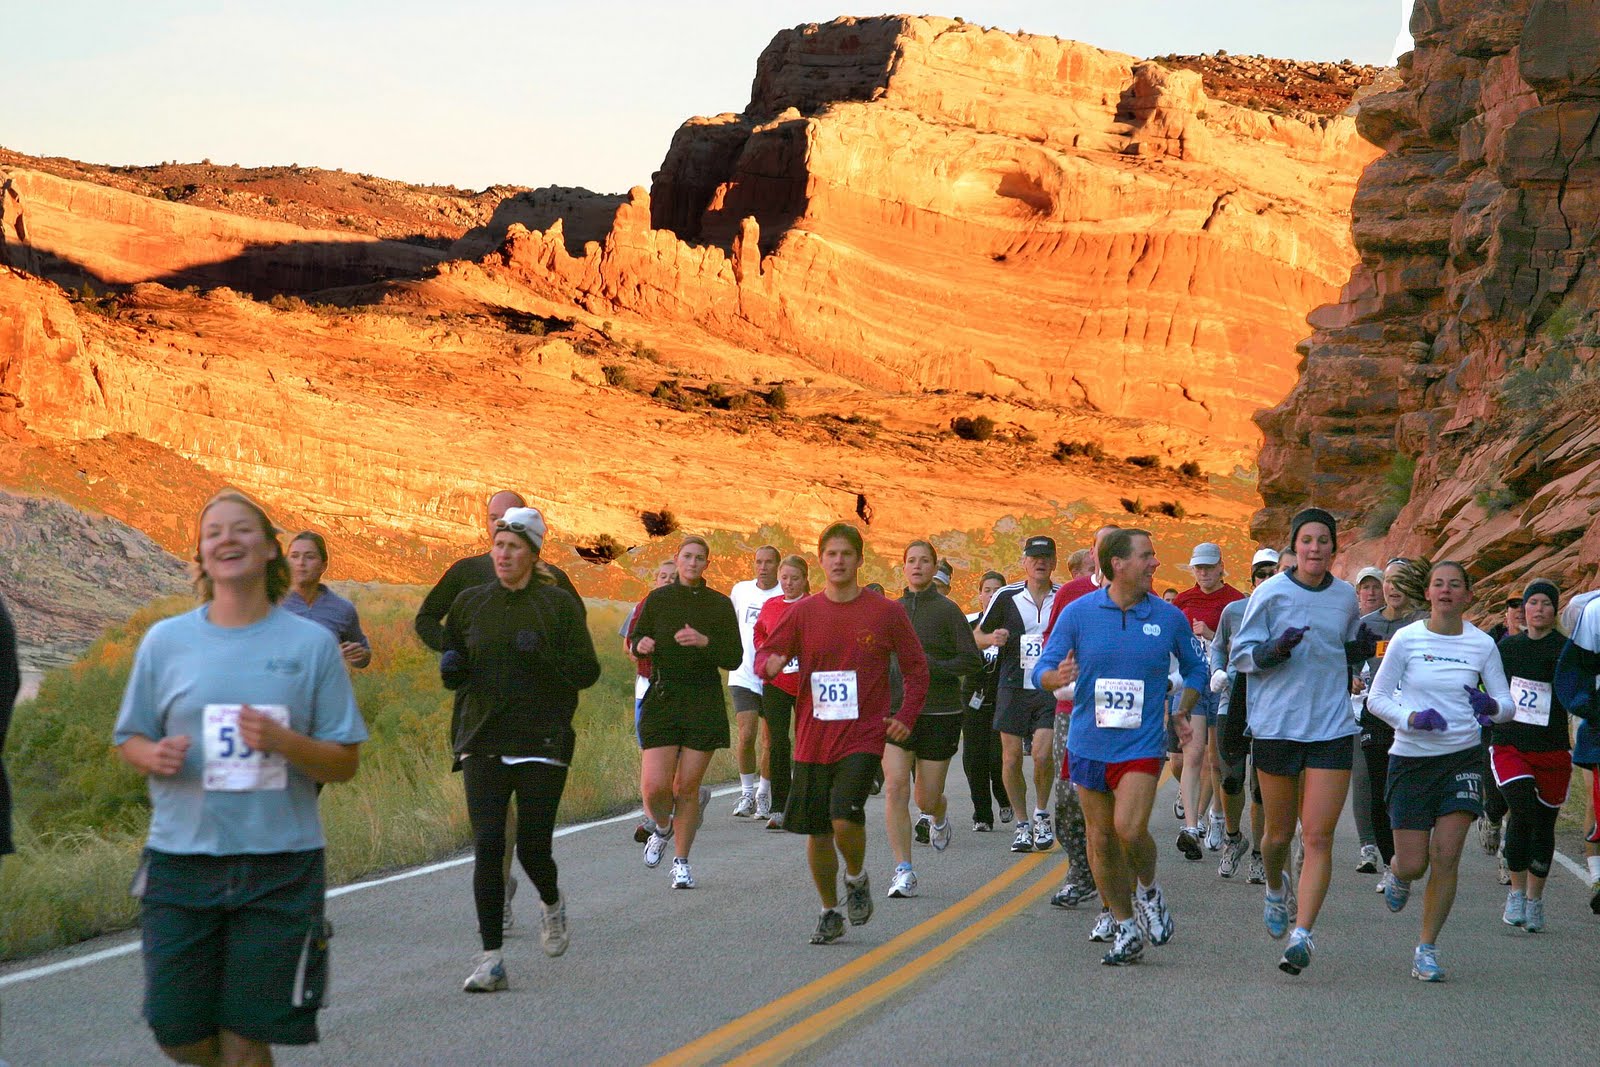 Official Moab Half Marathon Blog